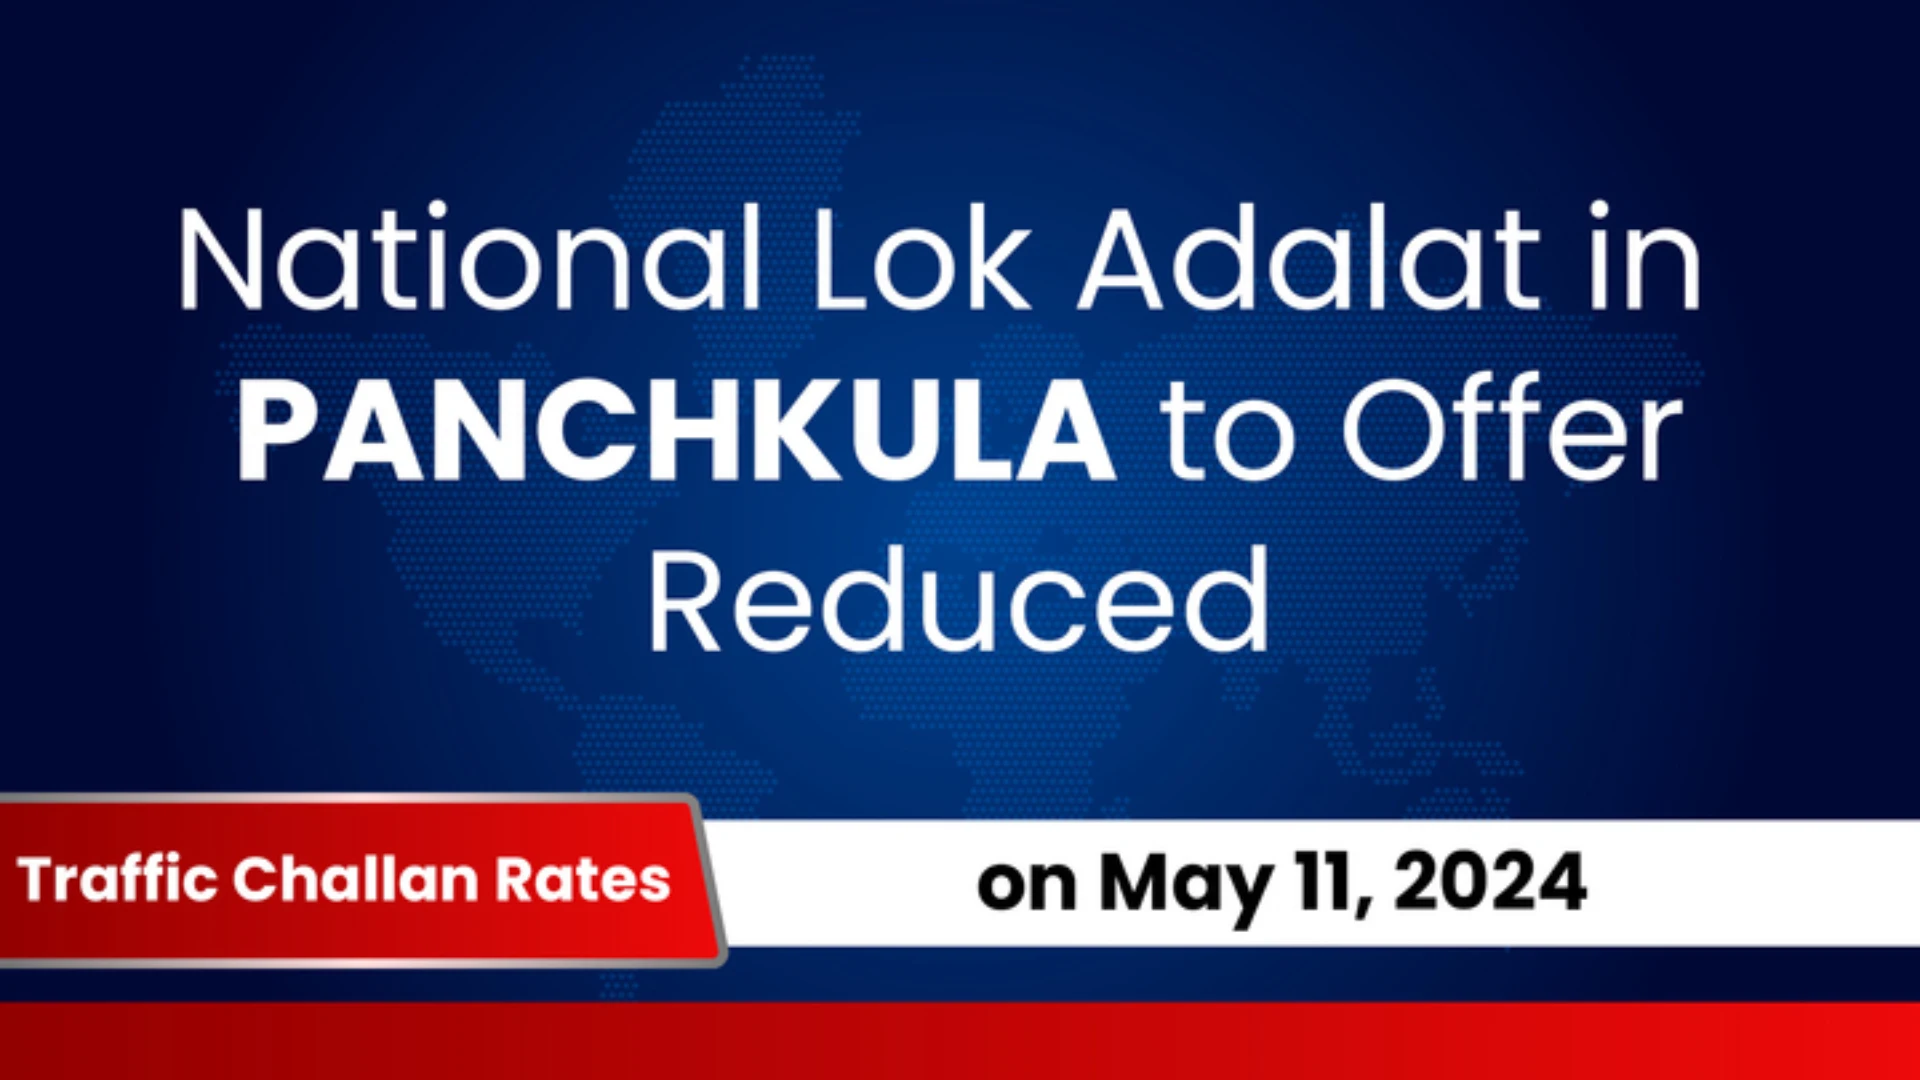 National Lok Adalat in Panchkula to Offer Reduced Traffic Challan Rates on May 11, 2024